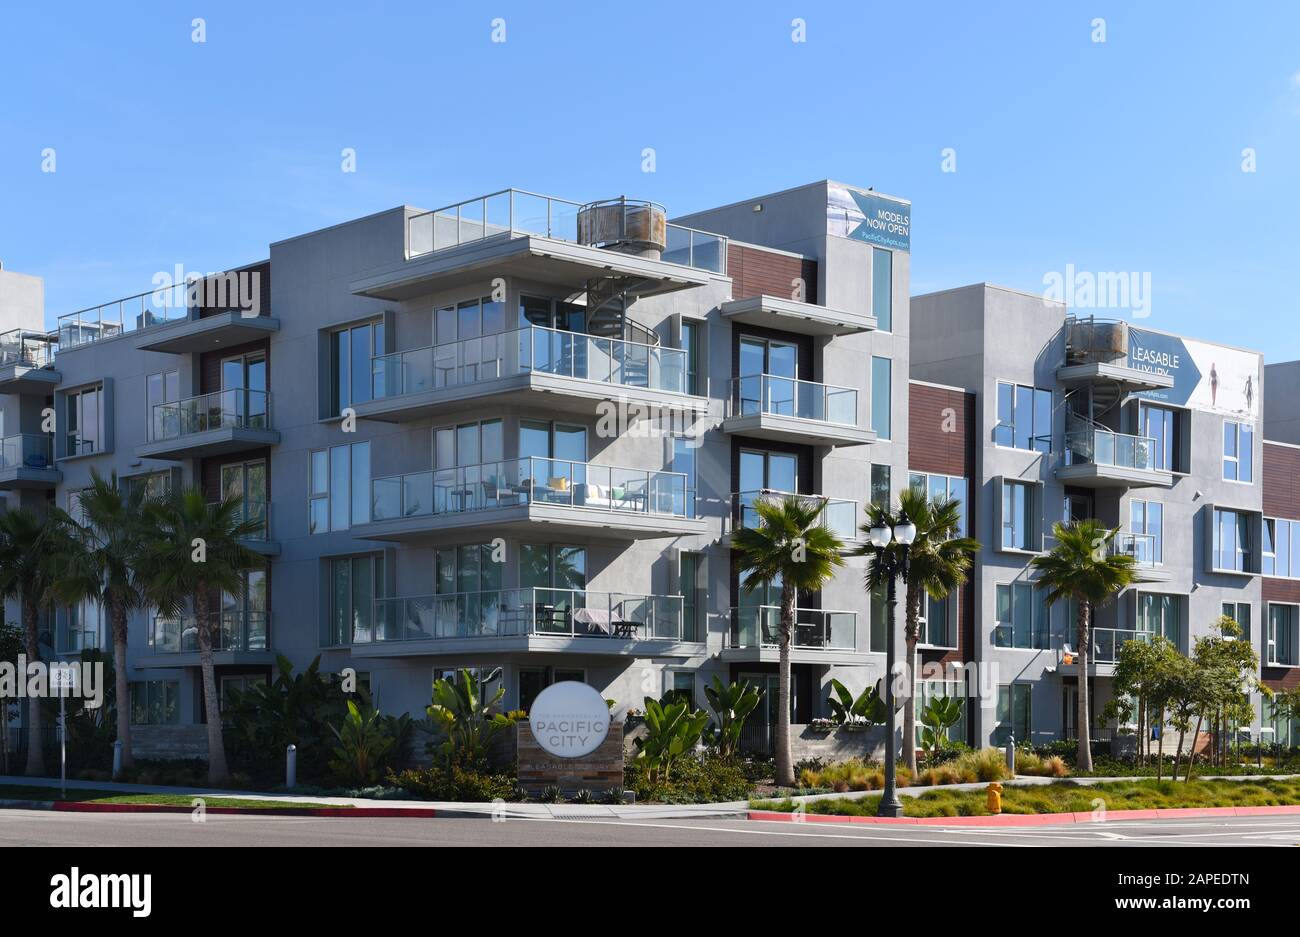 HUNTINGTON BEACH, KALIFORNIEN - 22. JANUAR 2020: The Residences at Pacific City, Luxury Apartment and Penthouses in Huntington Beach. Stockfoto